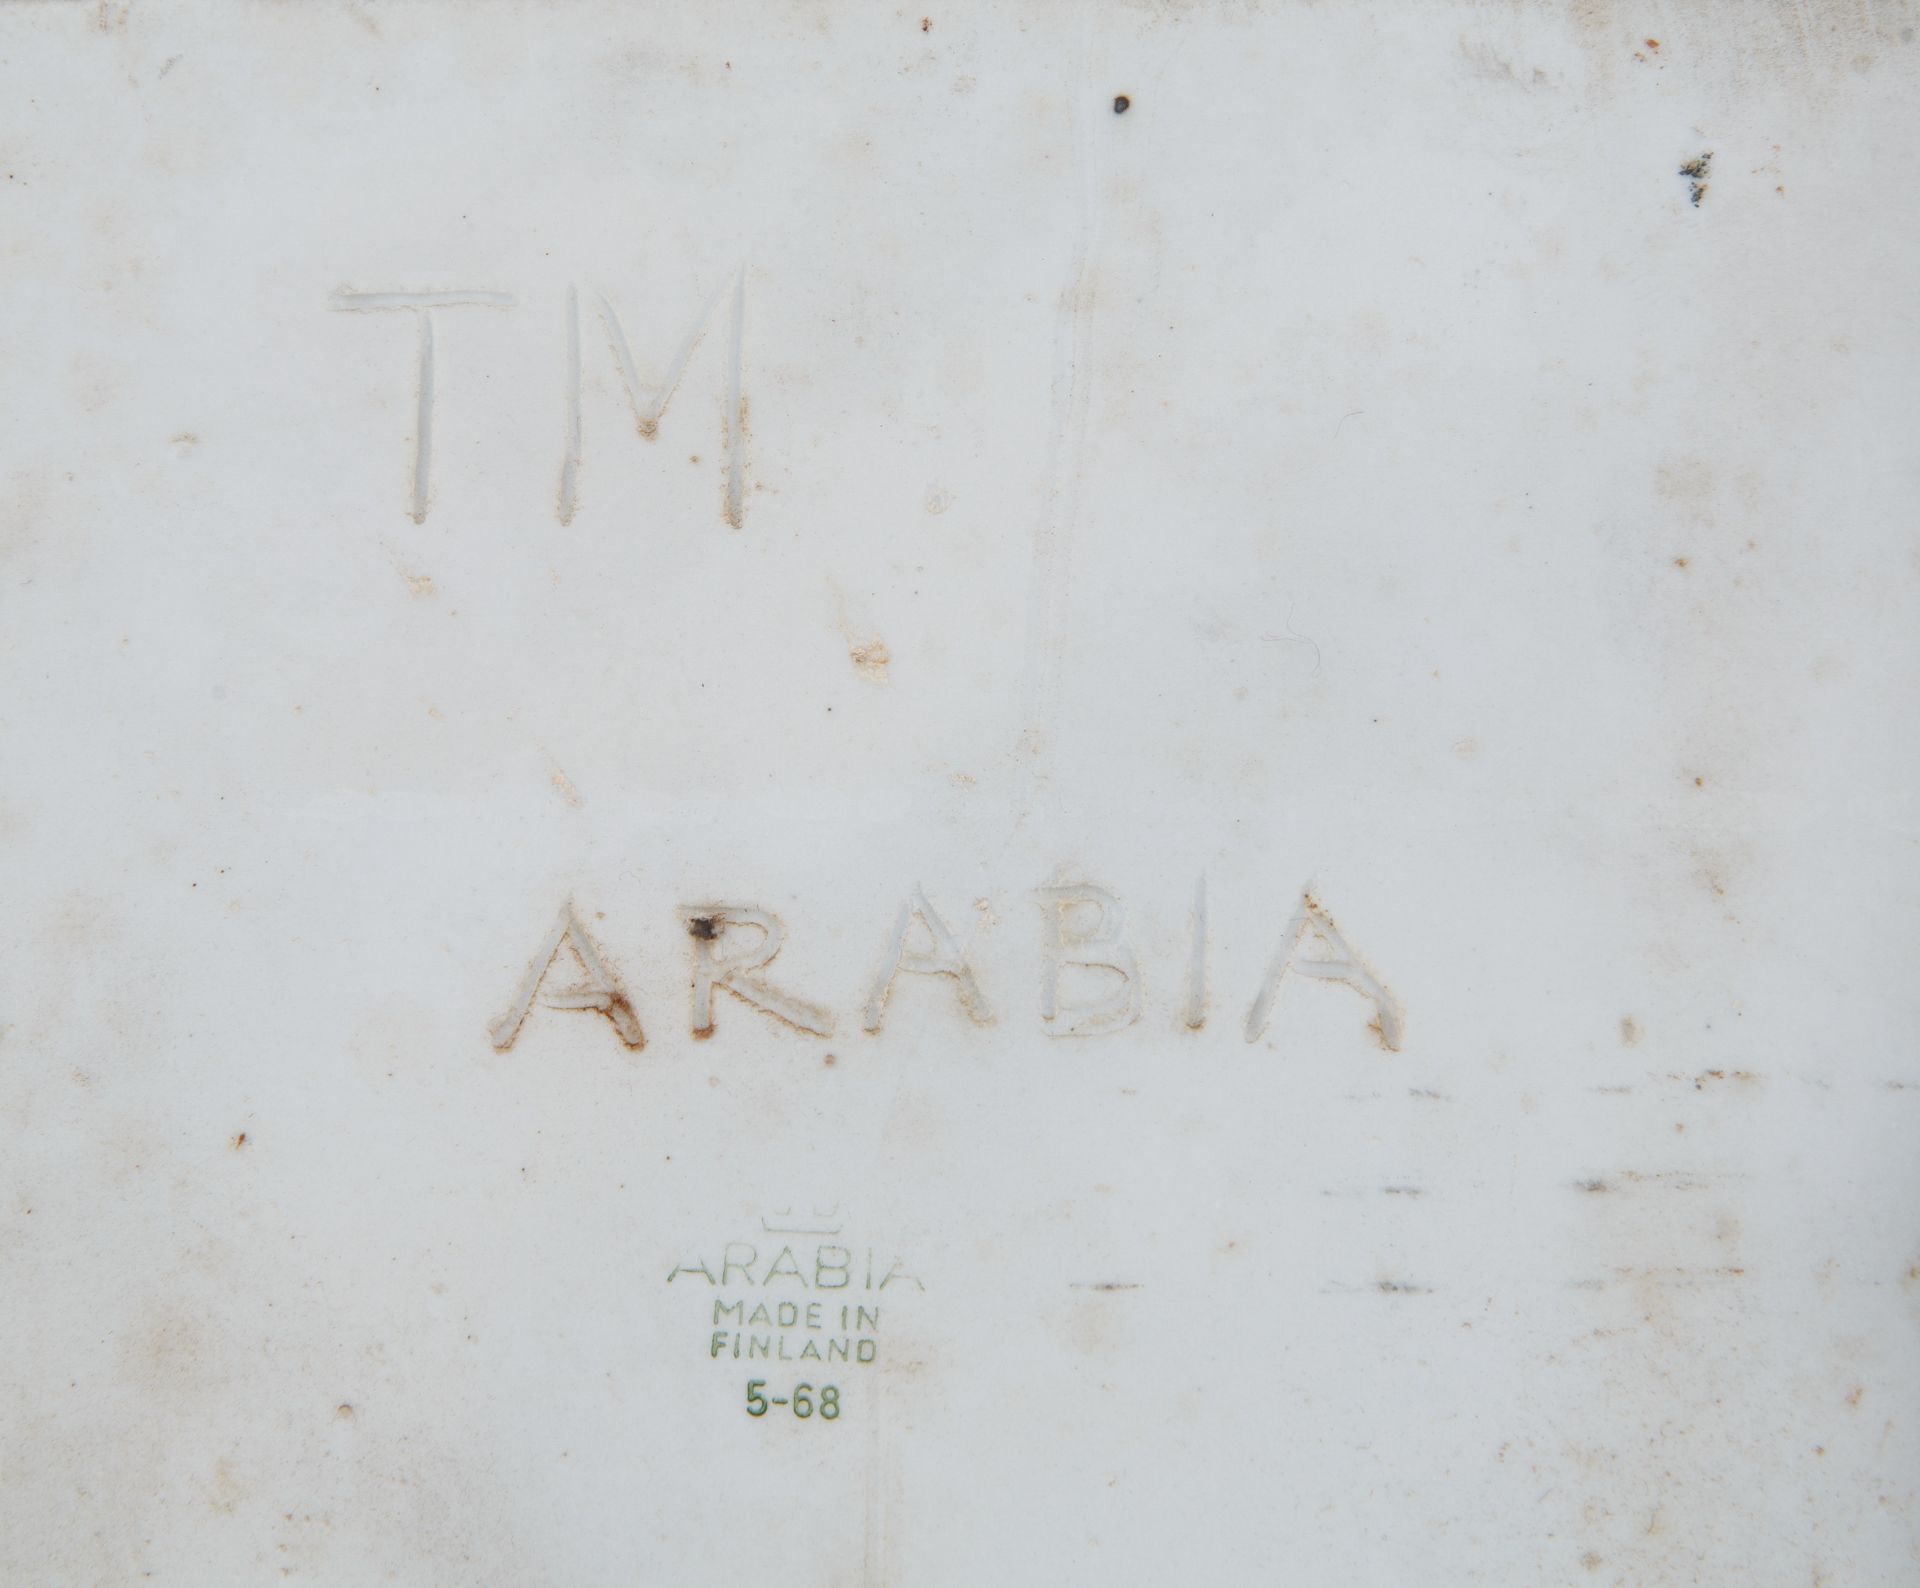 TOINI MUONA (FINNISH 1904-1987) FOR ARABIA - Bild 2 aus 4